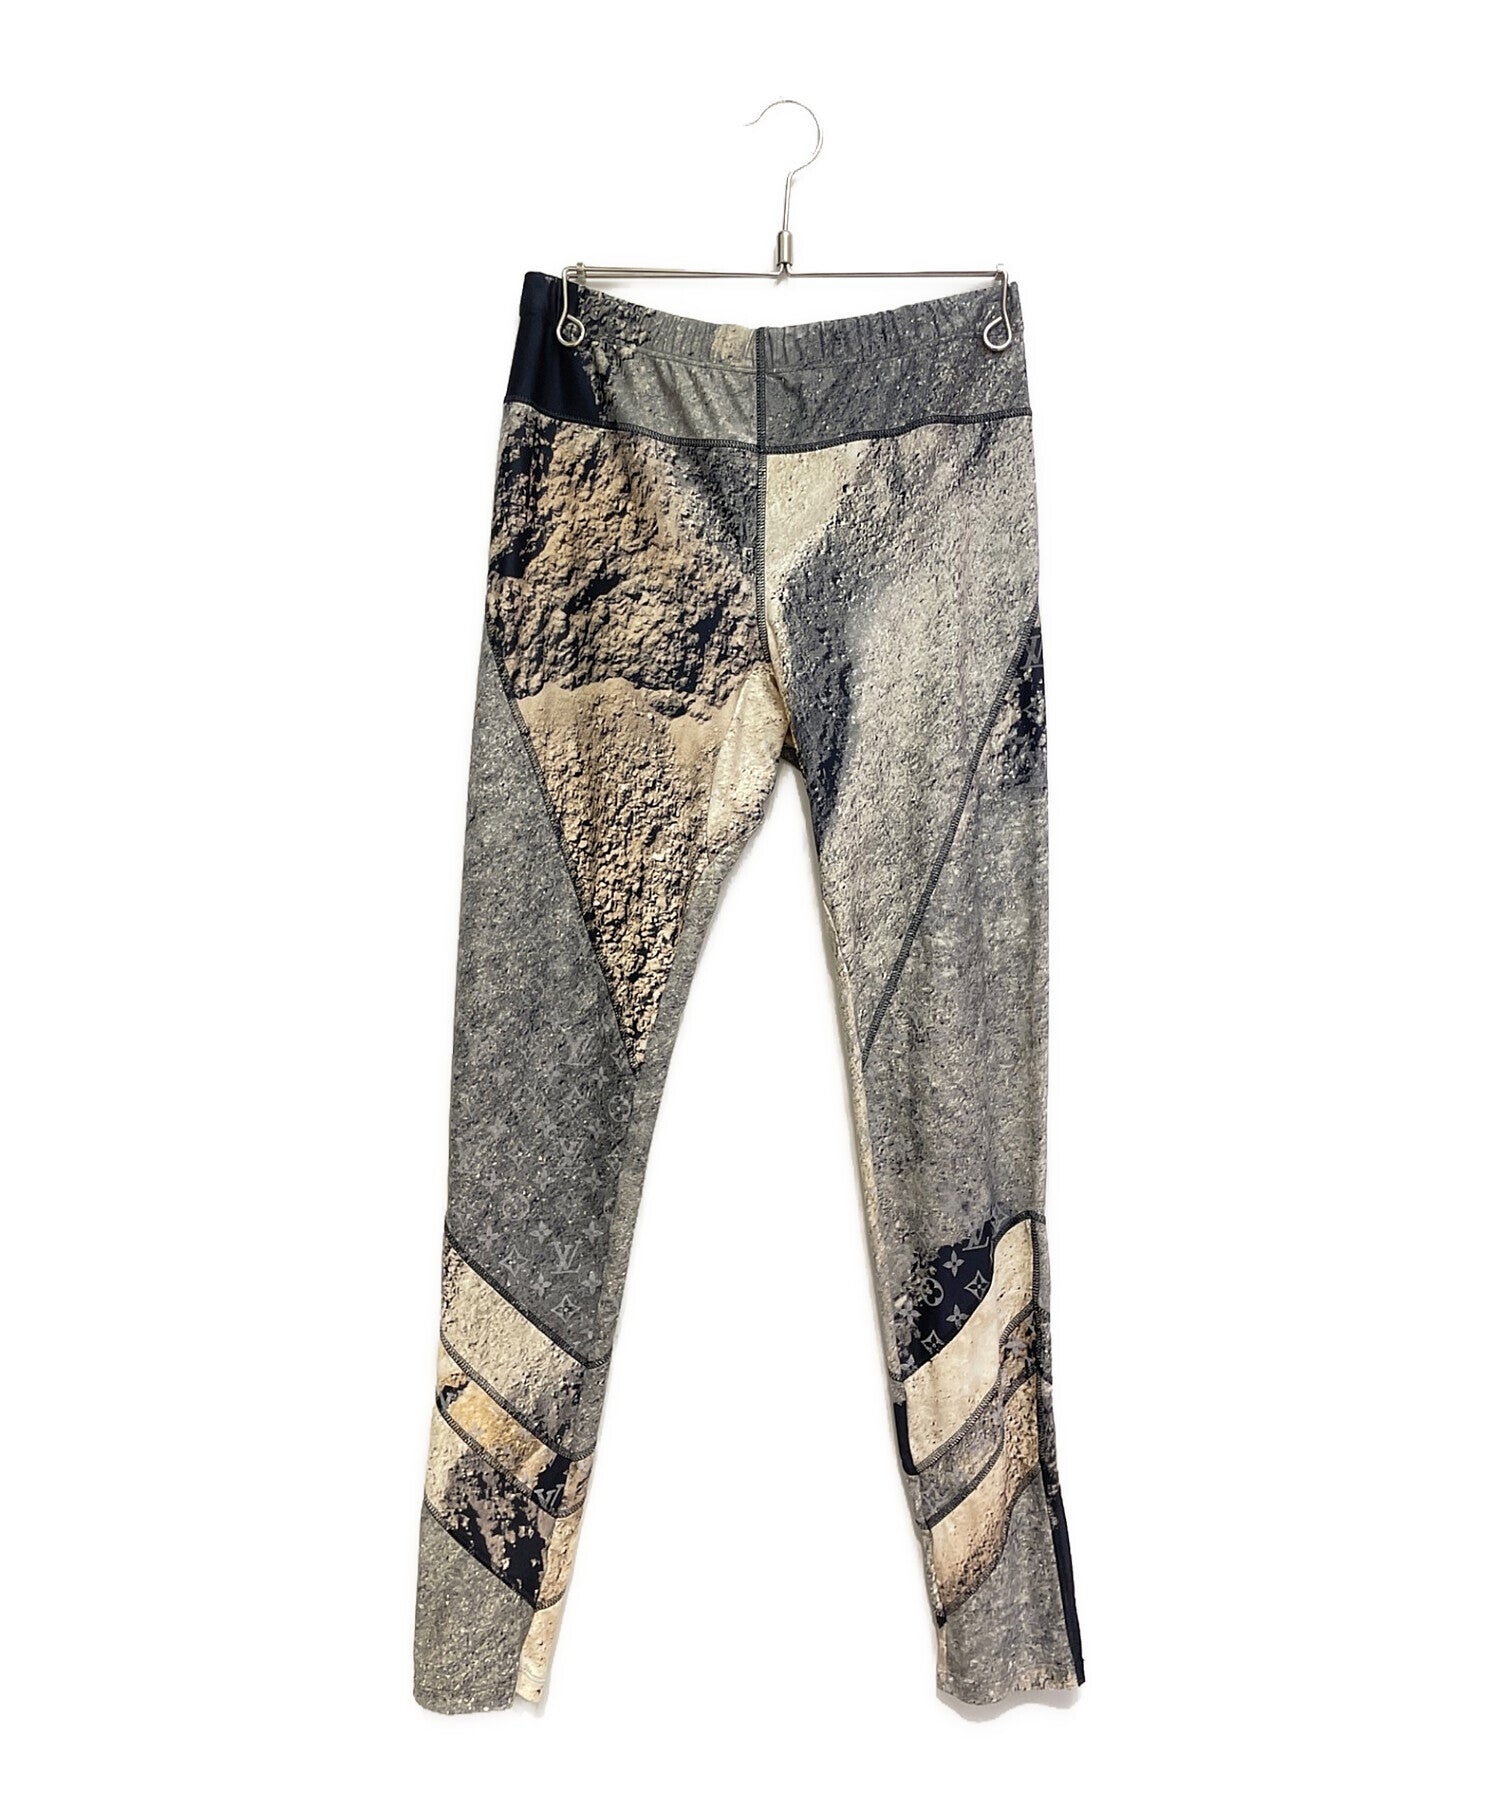 LOUIS VUITTON All-over reflective monogram leggings long pants RM182 G